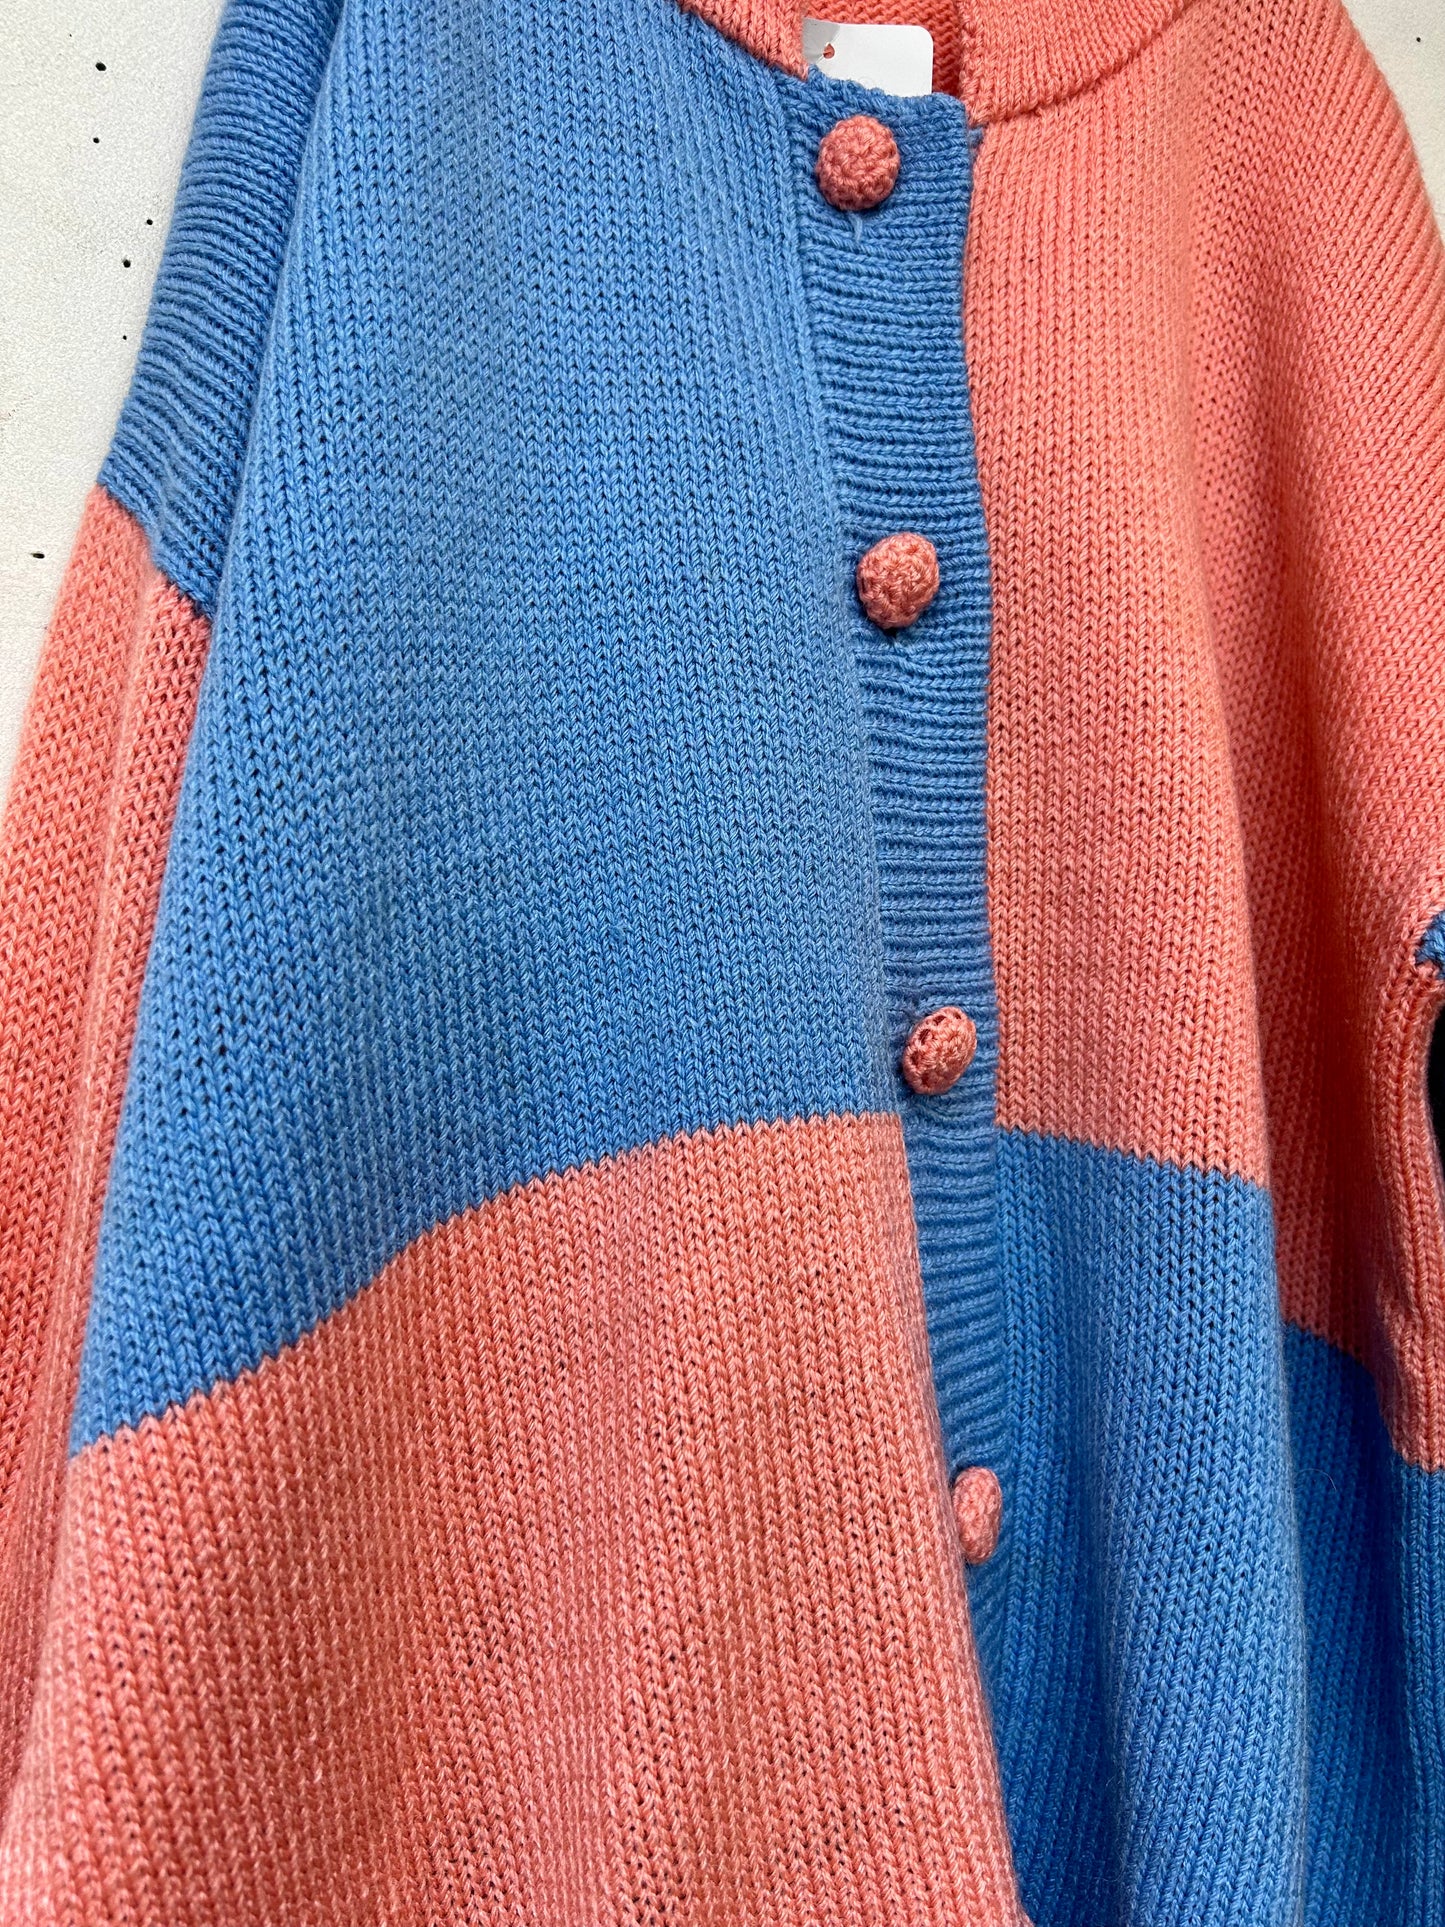 Vintage Knit Cardigan [I24989]